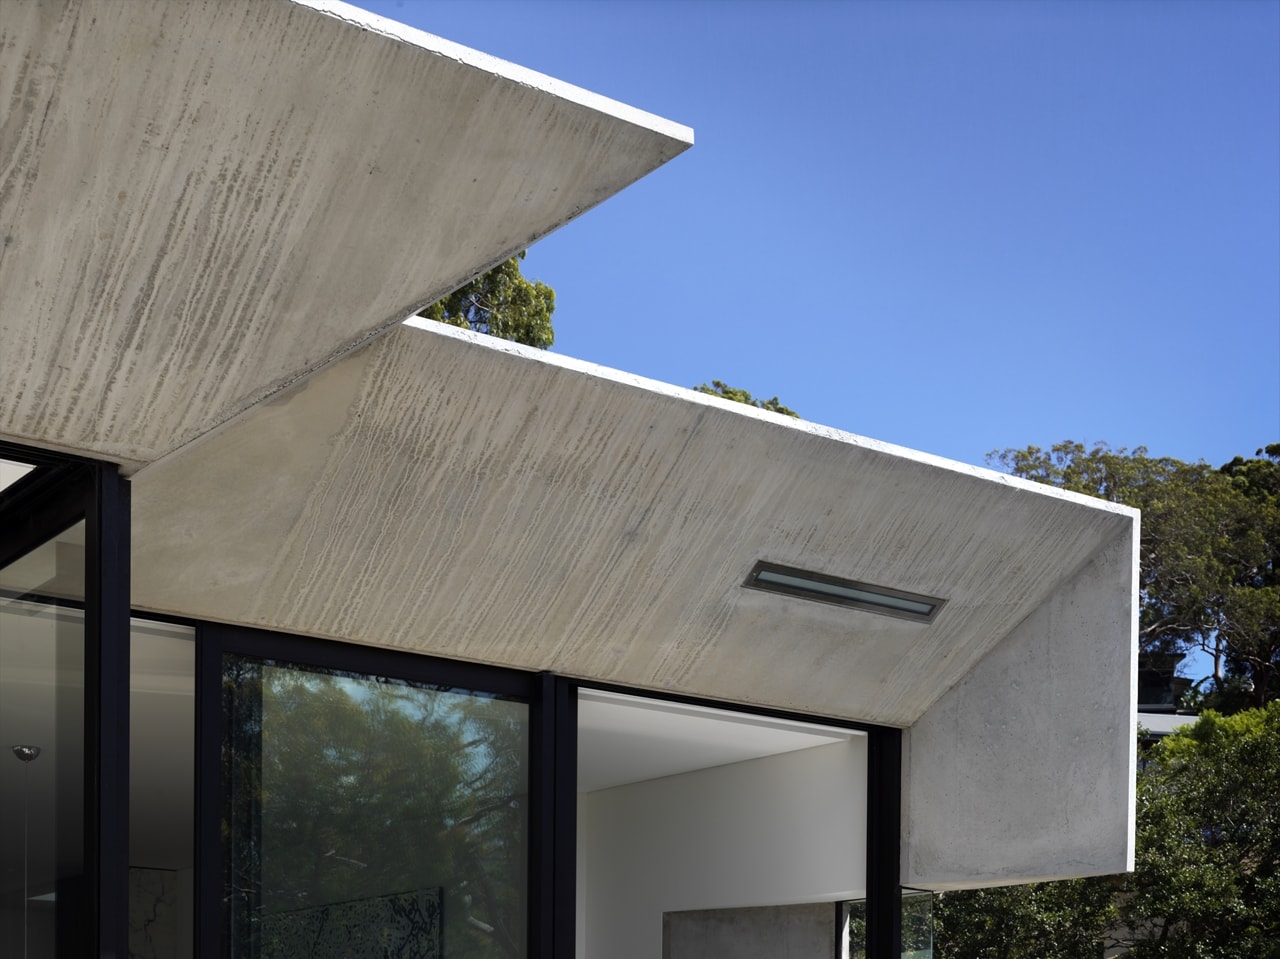 Exposed concrete exterior on the hillside house designed by Rolf Ockert